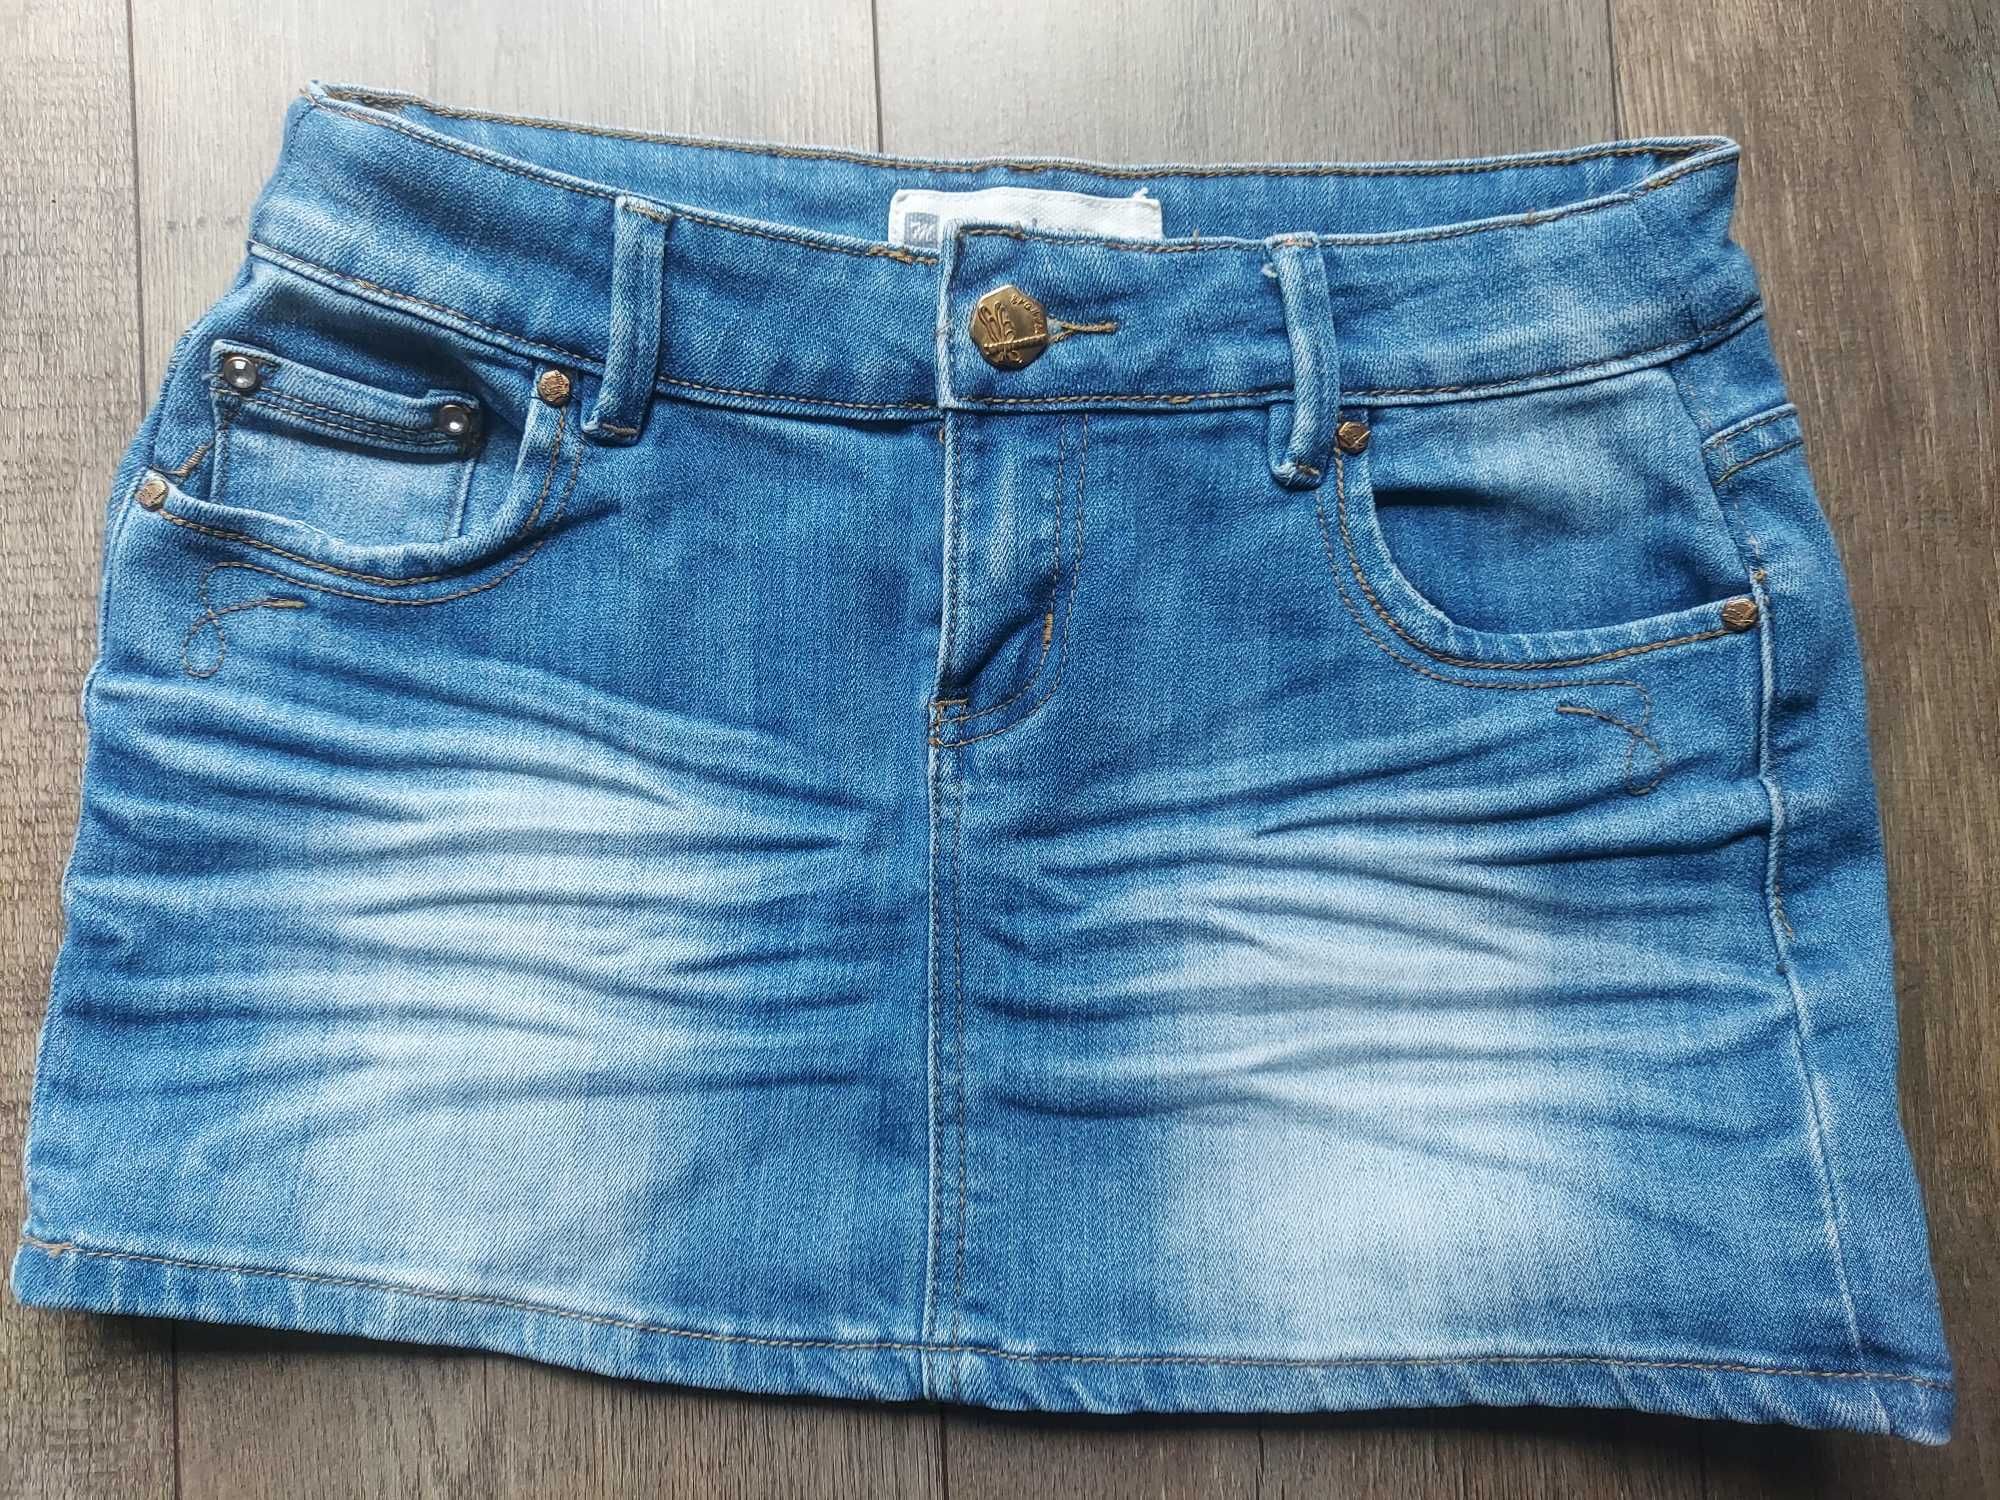 Spódniczka spódnica damska jeansowa jeans krótka mini JAK NOWA s